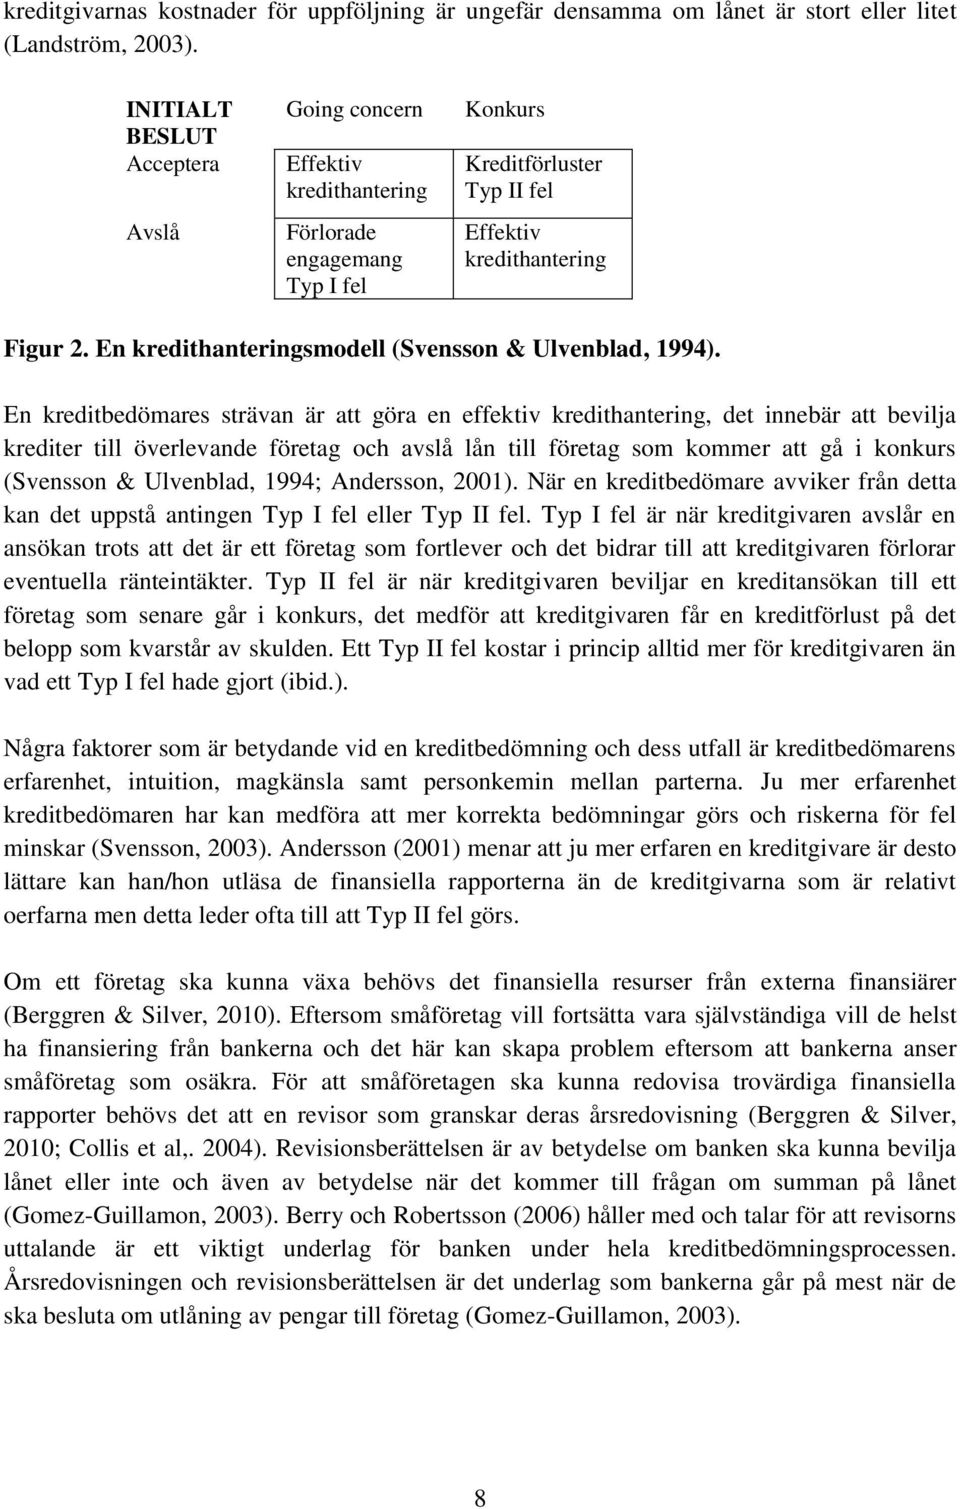 En kredithanteringsmodell (Svensson & Ulvenblad, 1994).